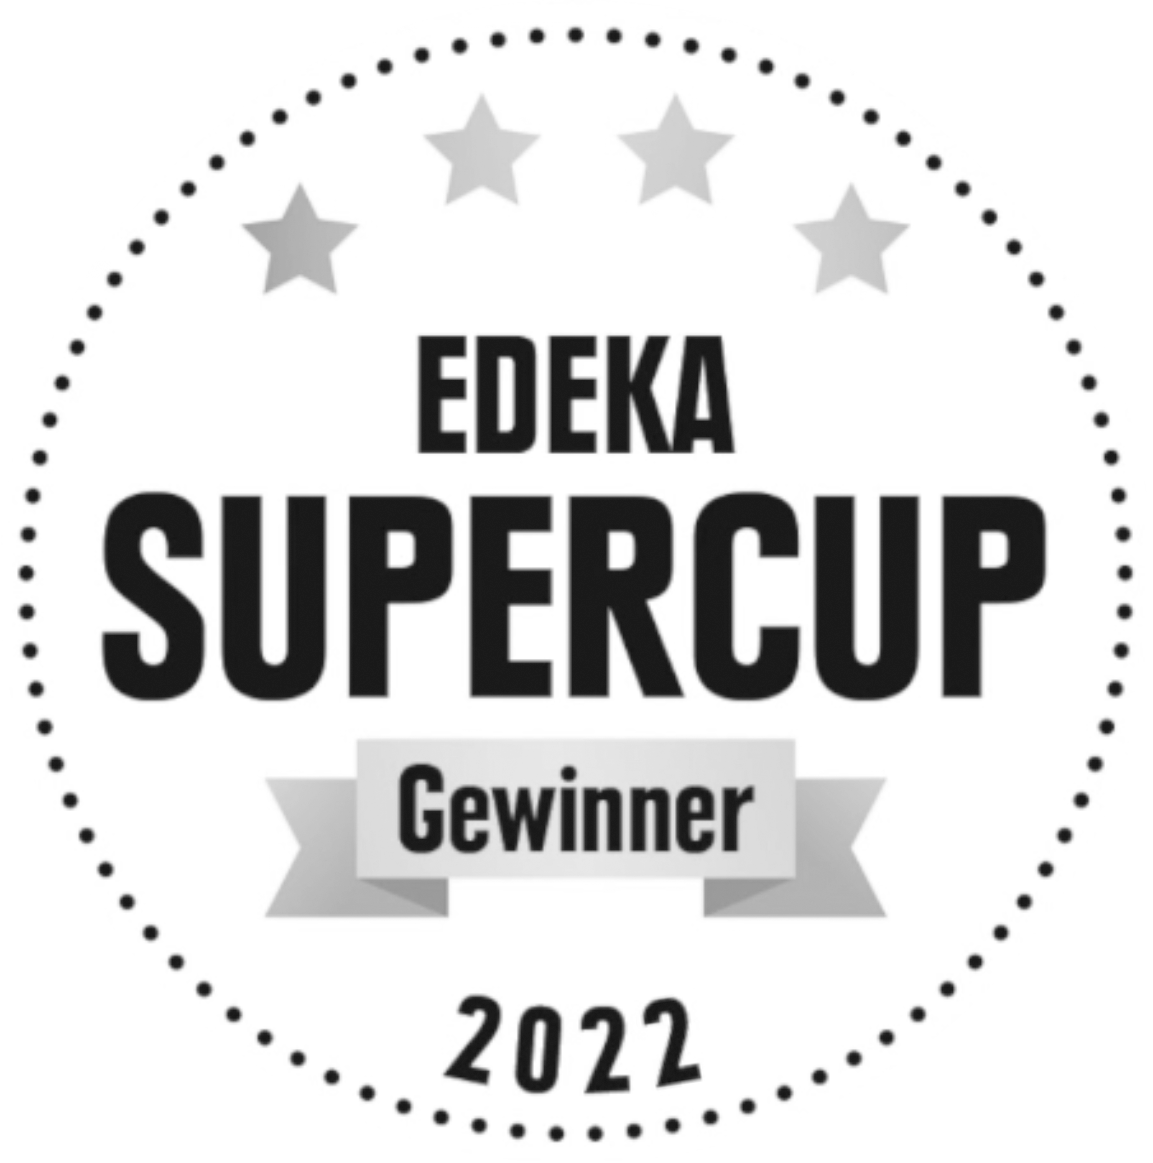 EDEKA SuperCup 2022